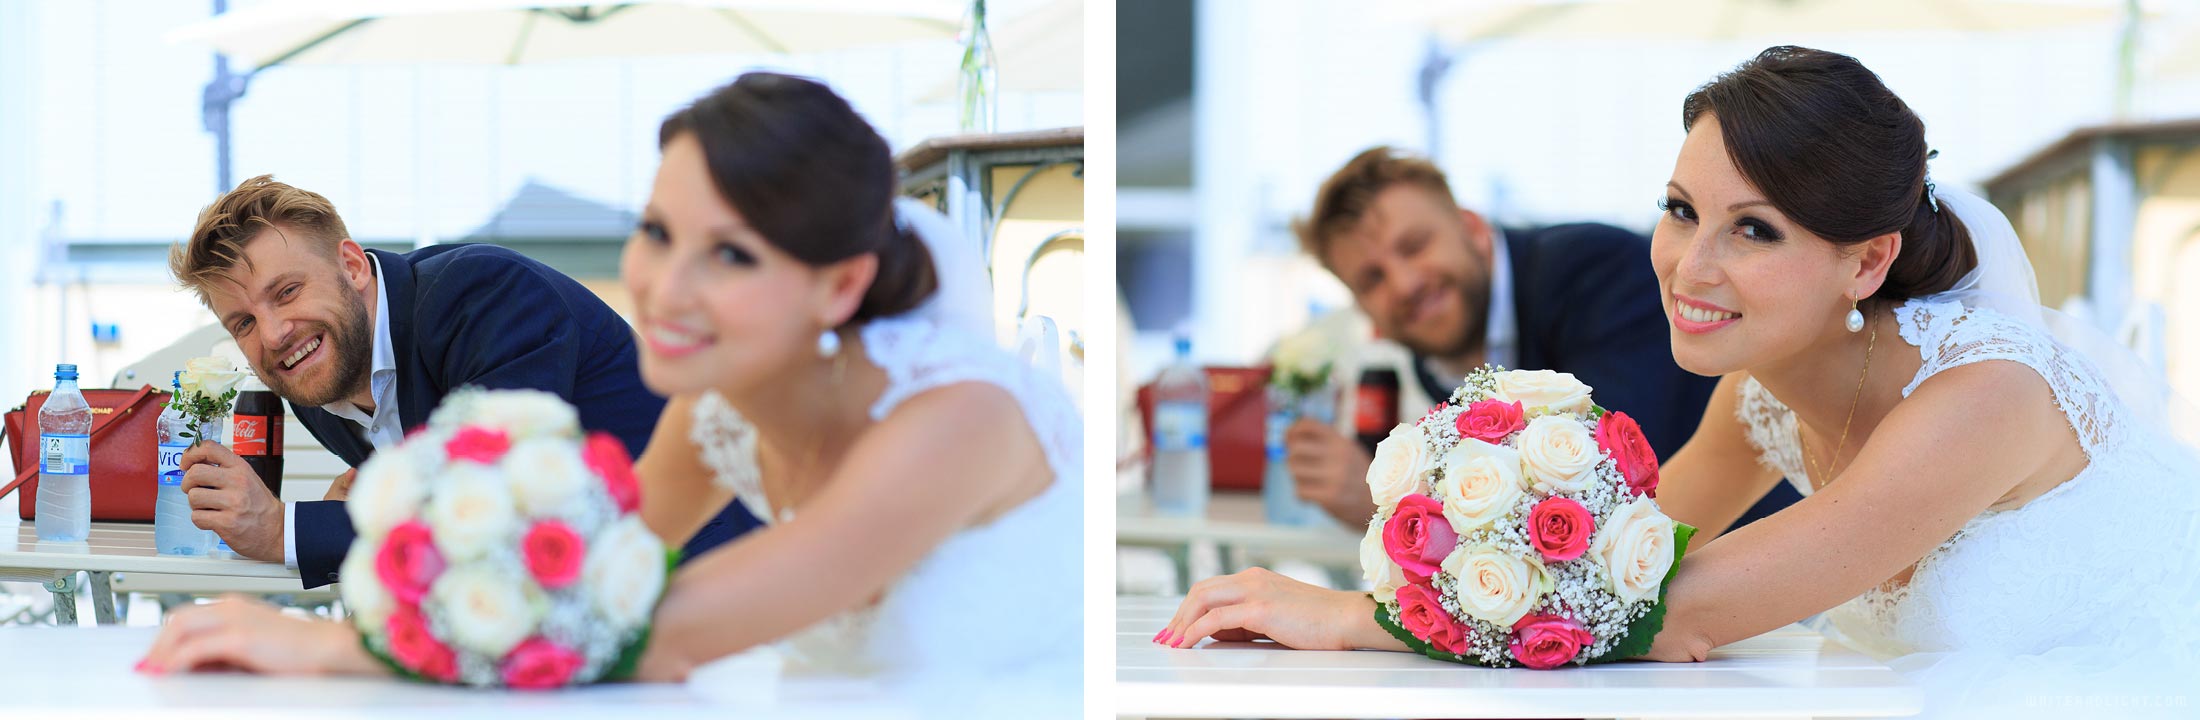 cost of wedding photographer